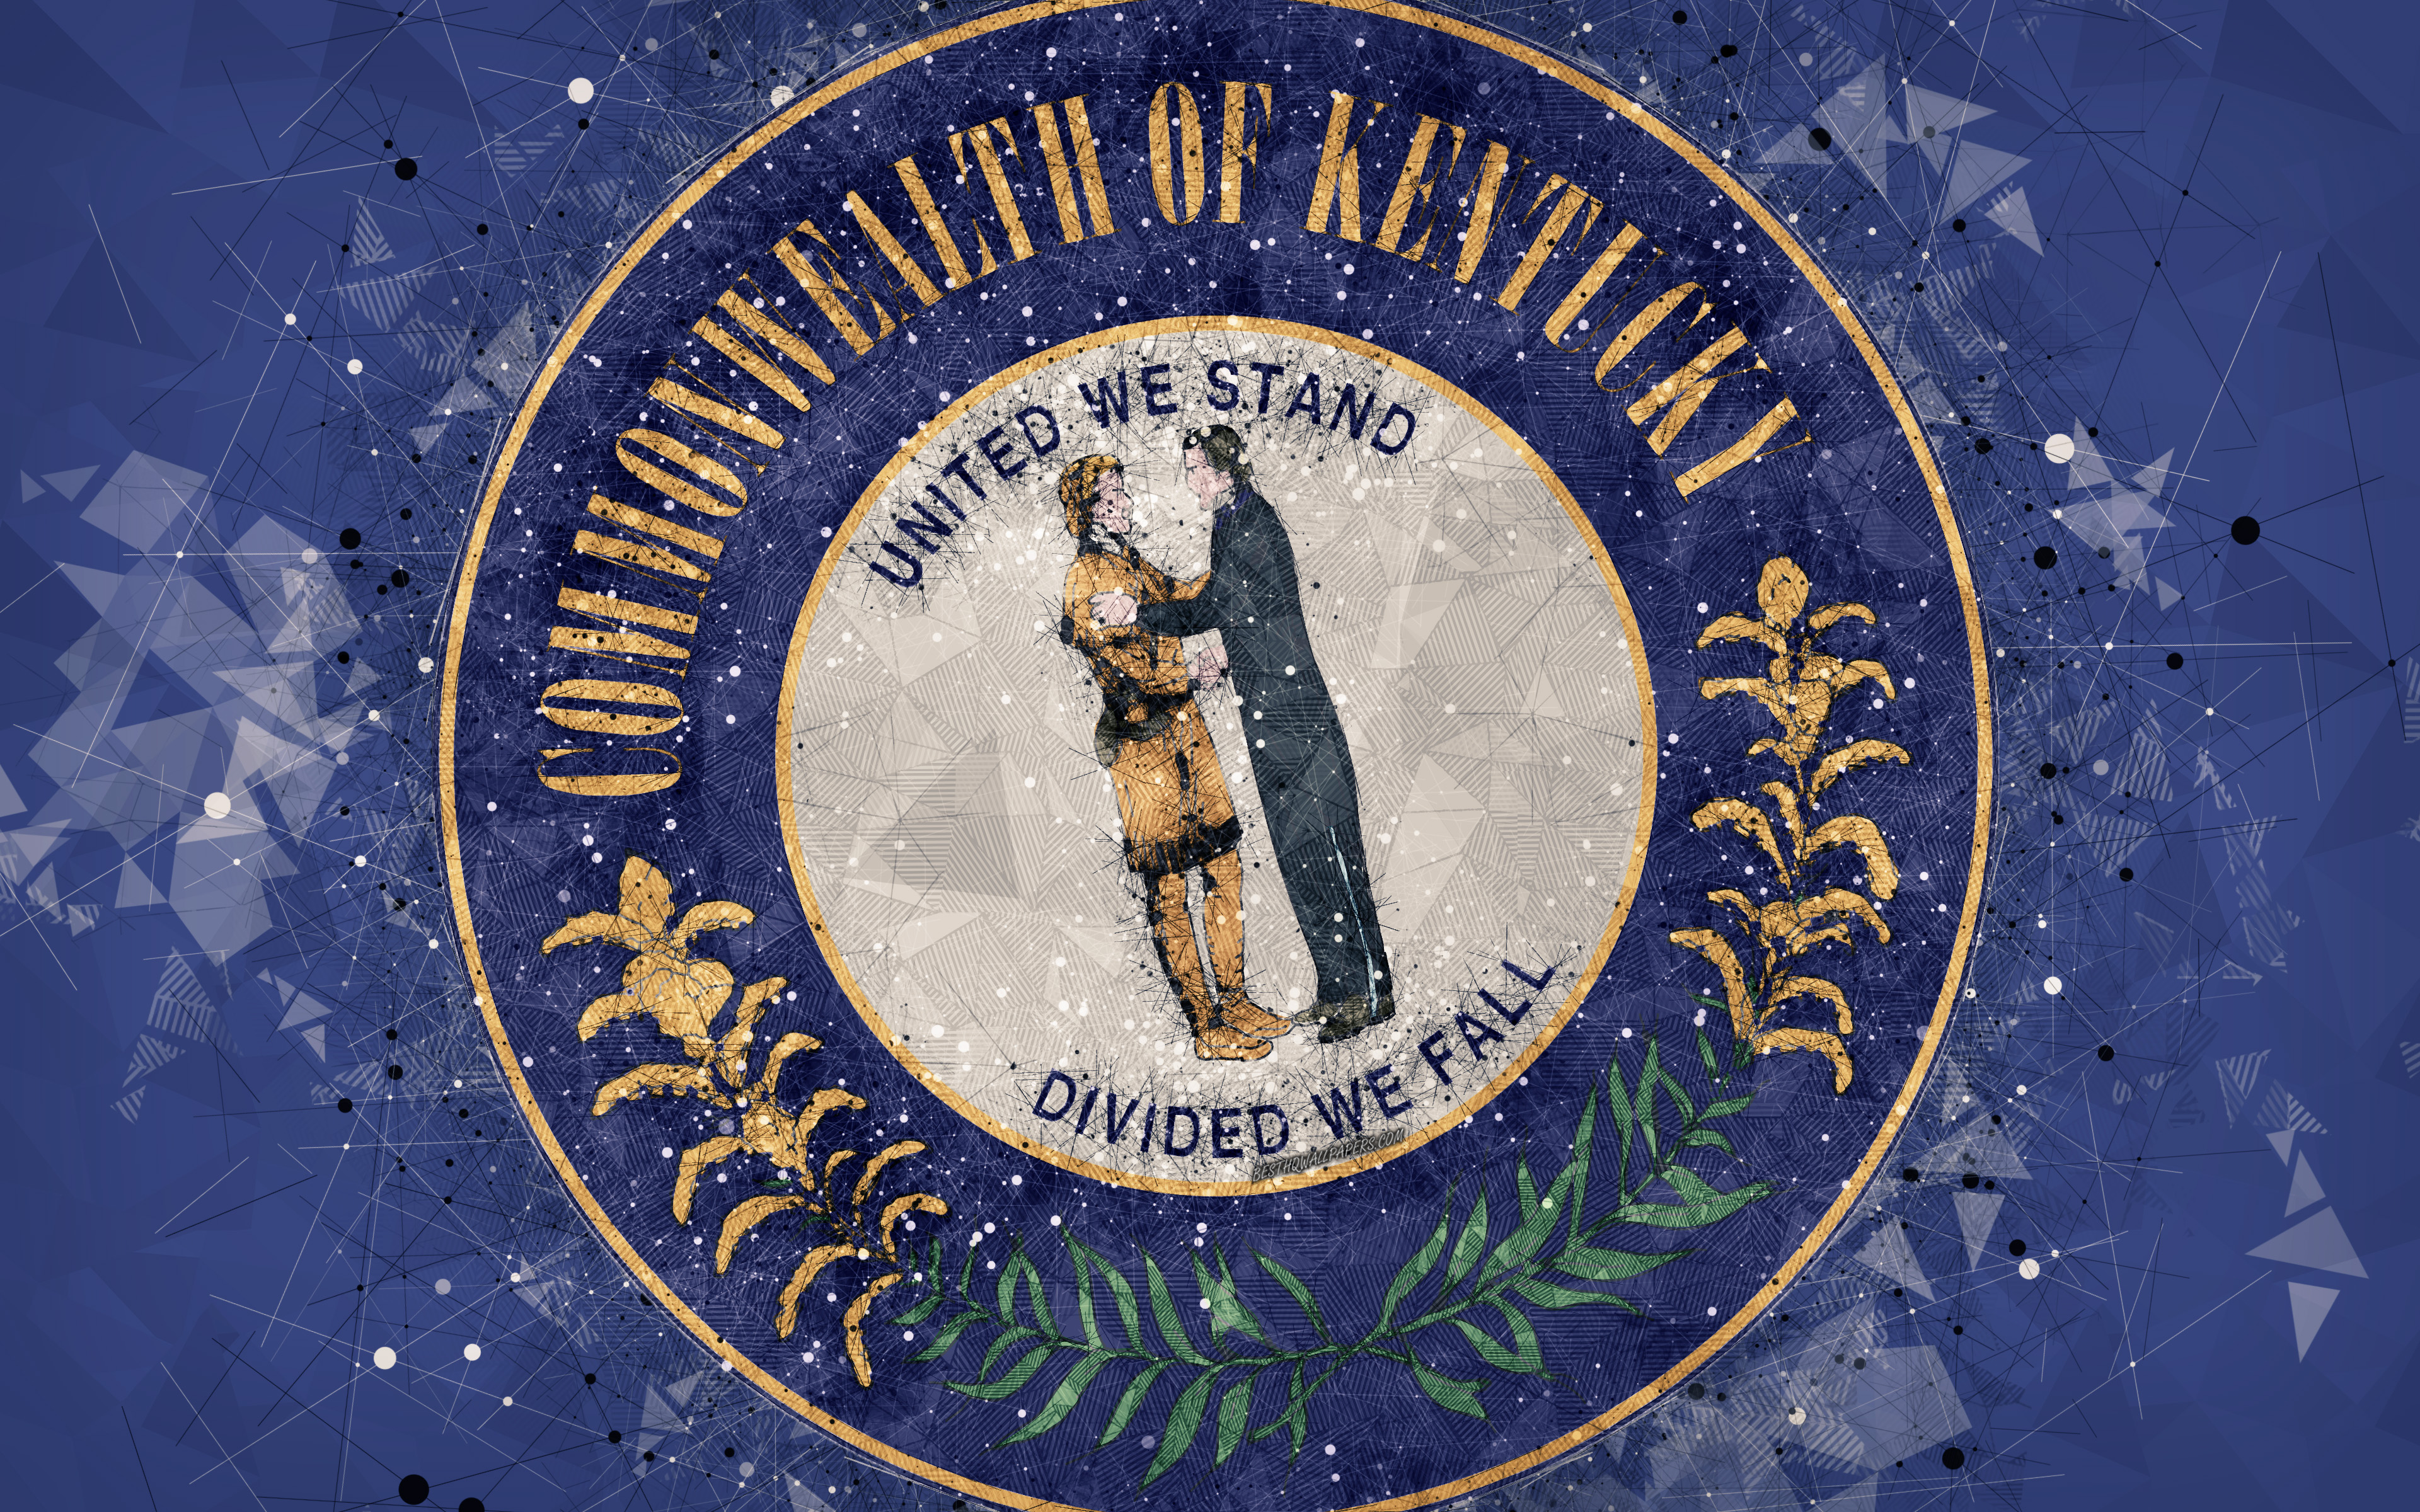 Download wallpapers Seal of Kentucky 4k emblem geometric art